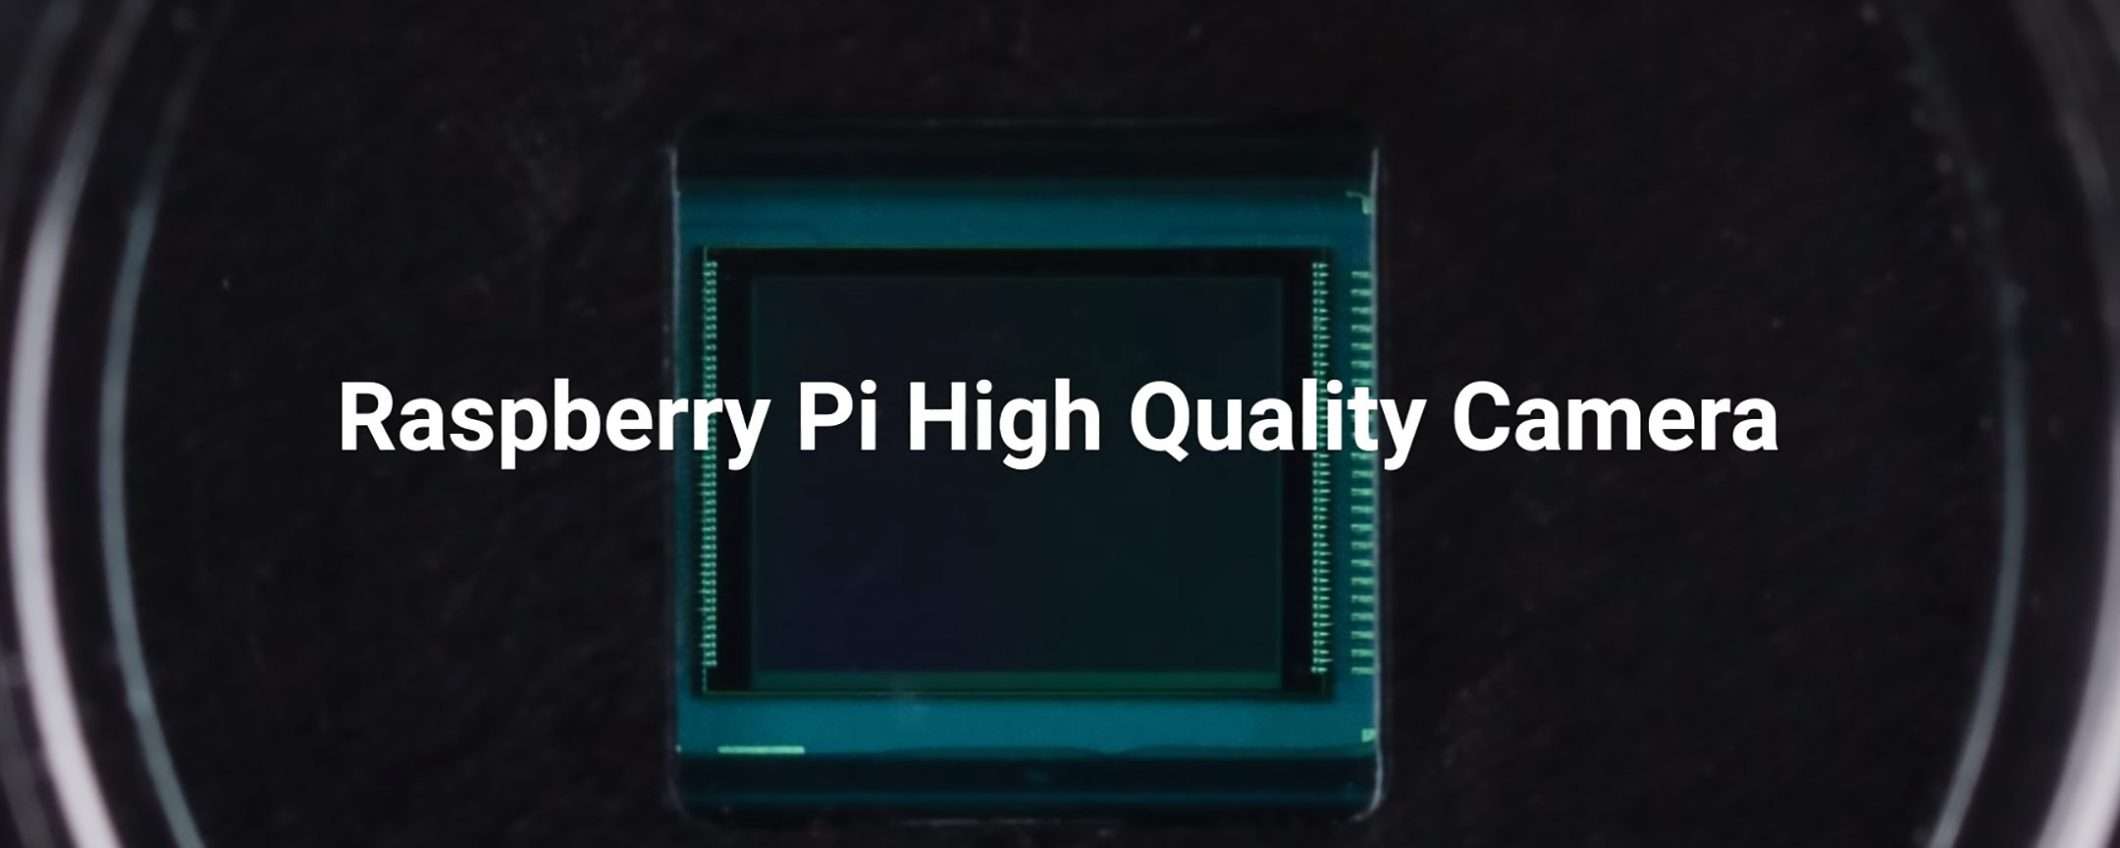 Raspberry Pi High Quality Camera con sensore Sony